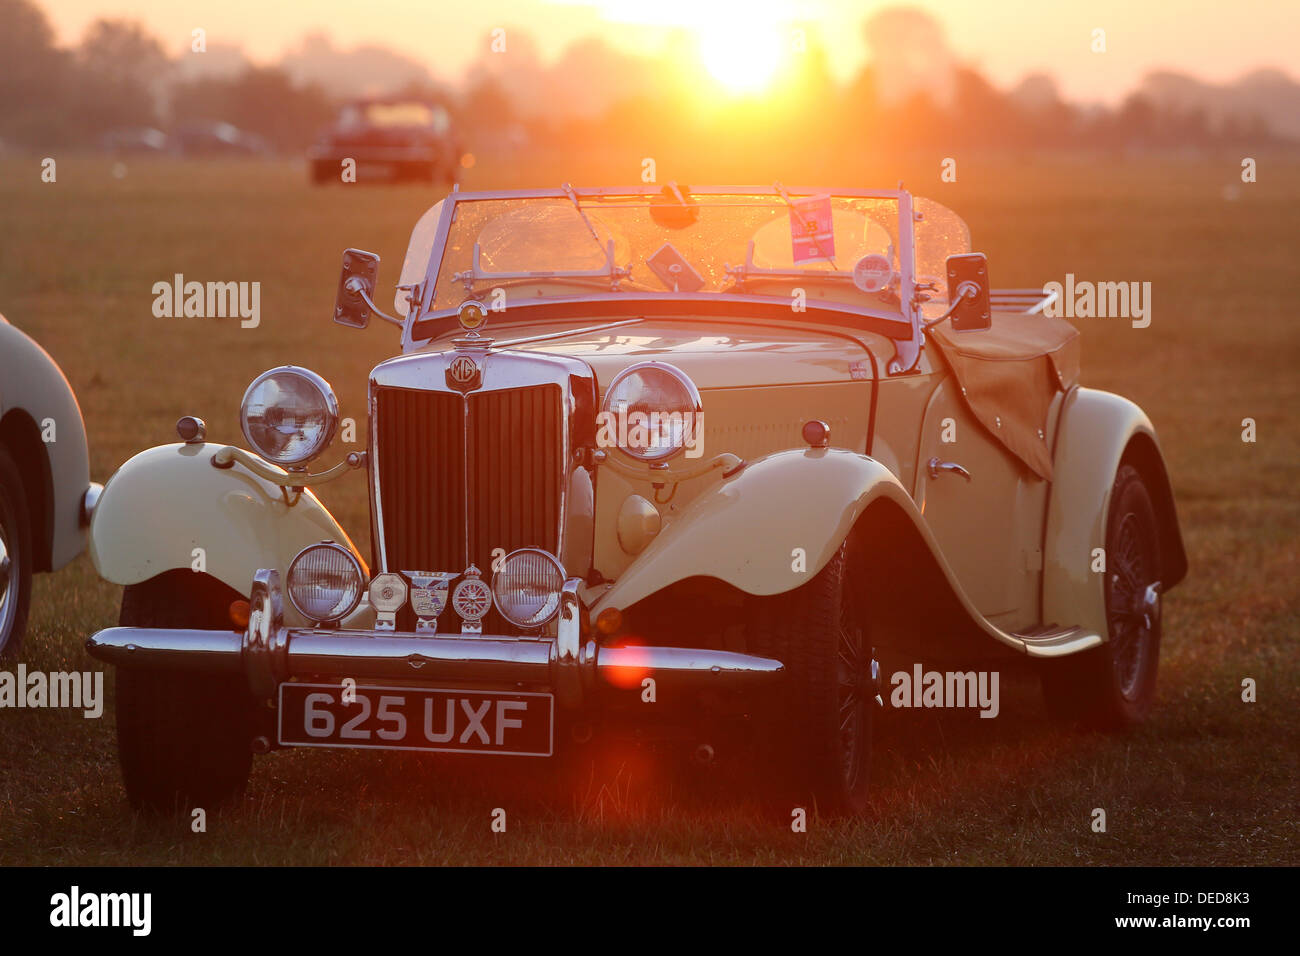 Chichester, UK. 15. September 2013. Goodwood Revival 2013 bei The Goodwood Motor Circuit - Foto zeigt Sonnenaufgang über einem 1953 MG TD © Oliver Dixon/Alamy Live News Stockfoto